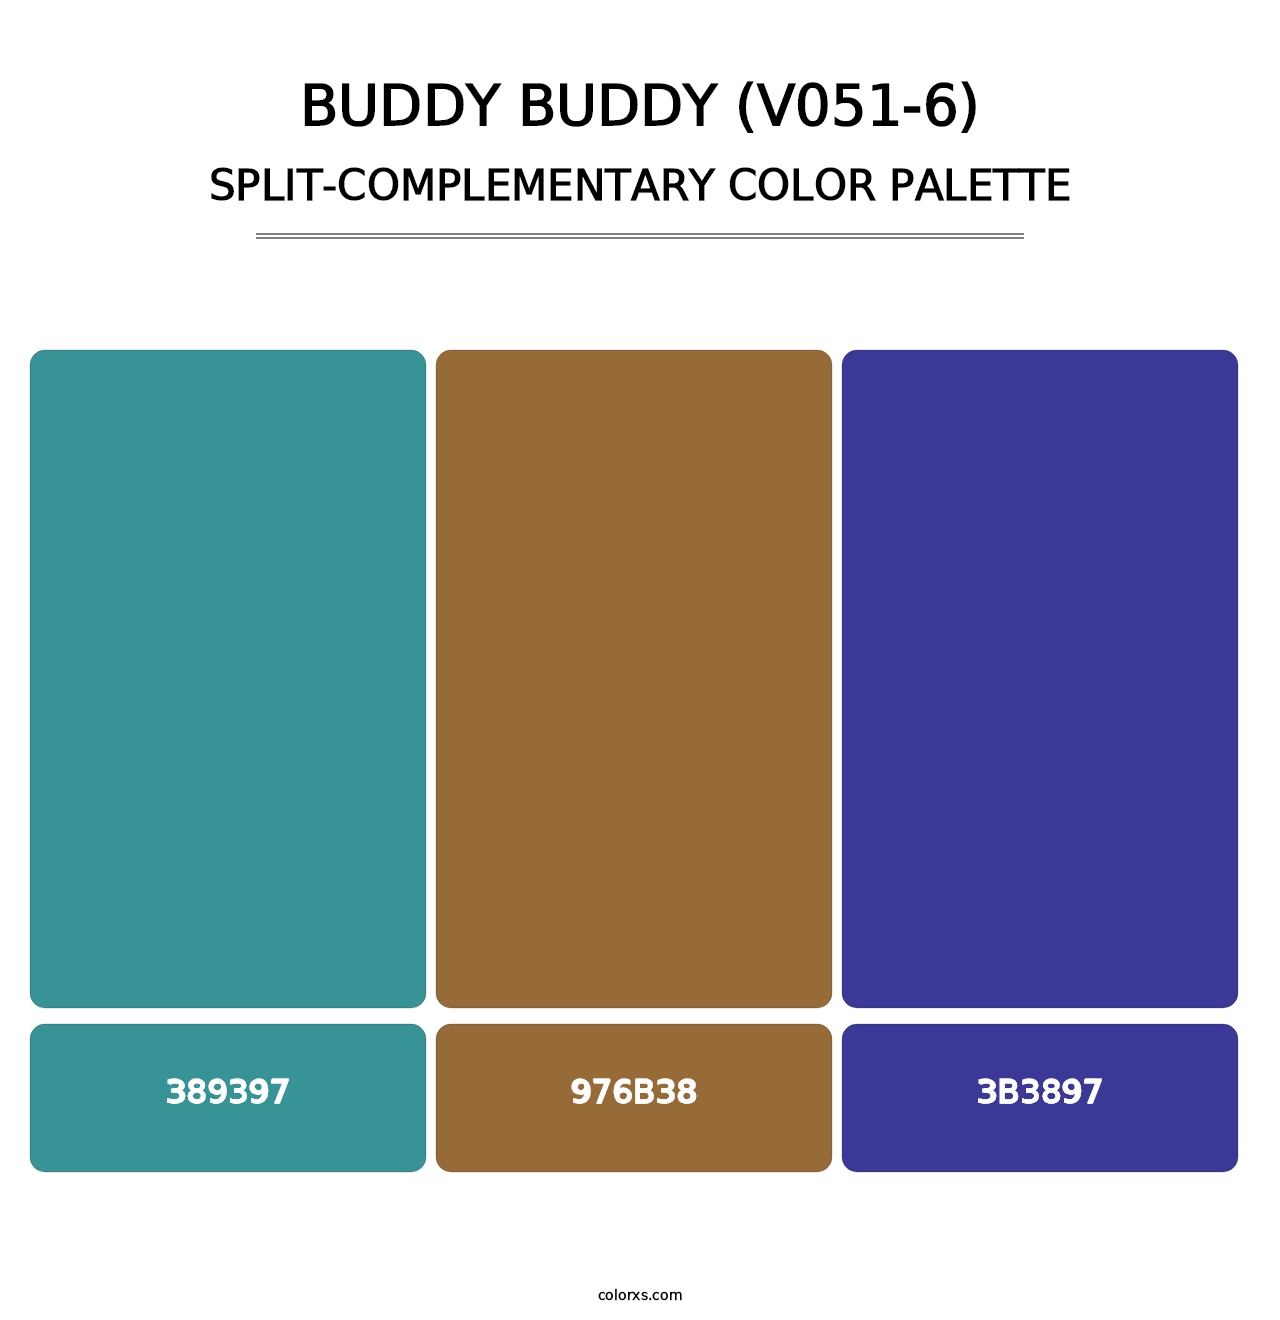 Buddy Buddy (V051-6) - Split-Complementary Color Palette